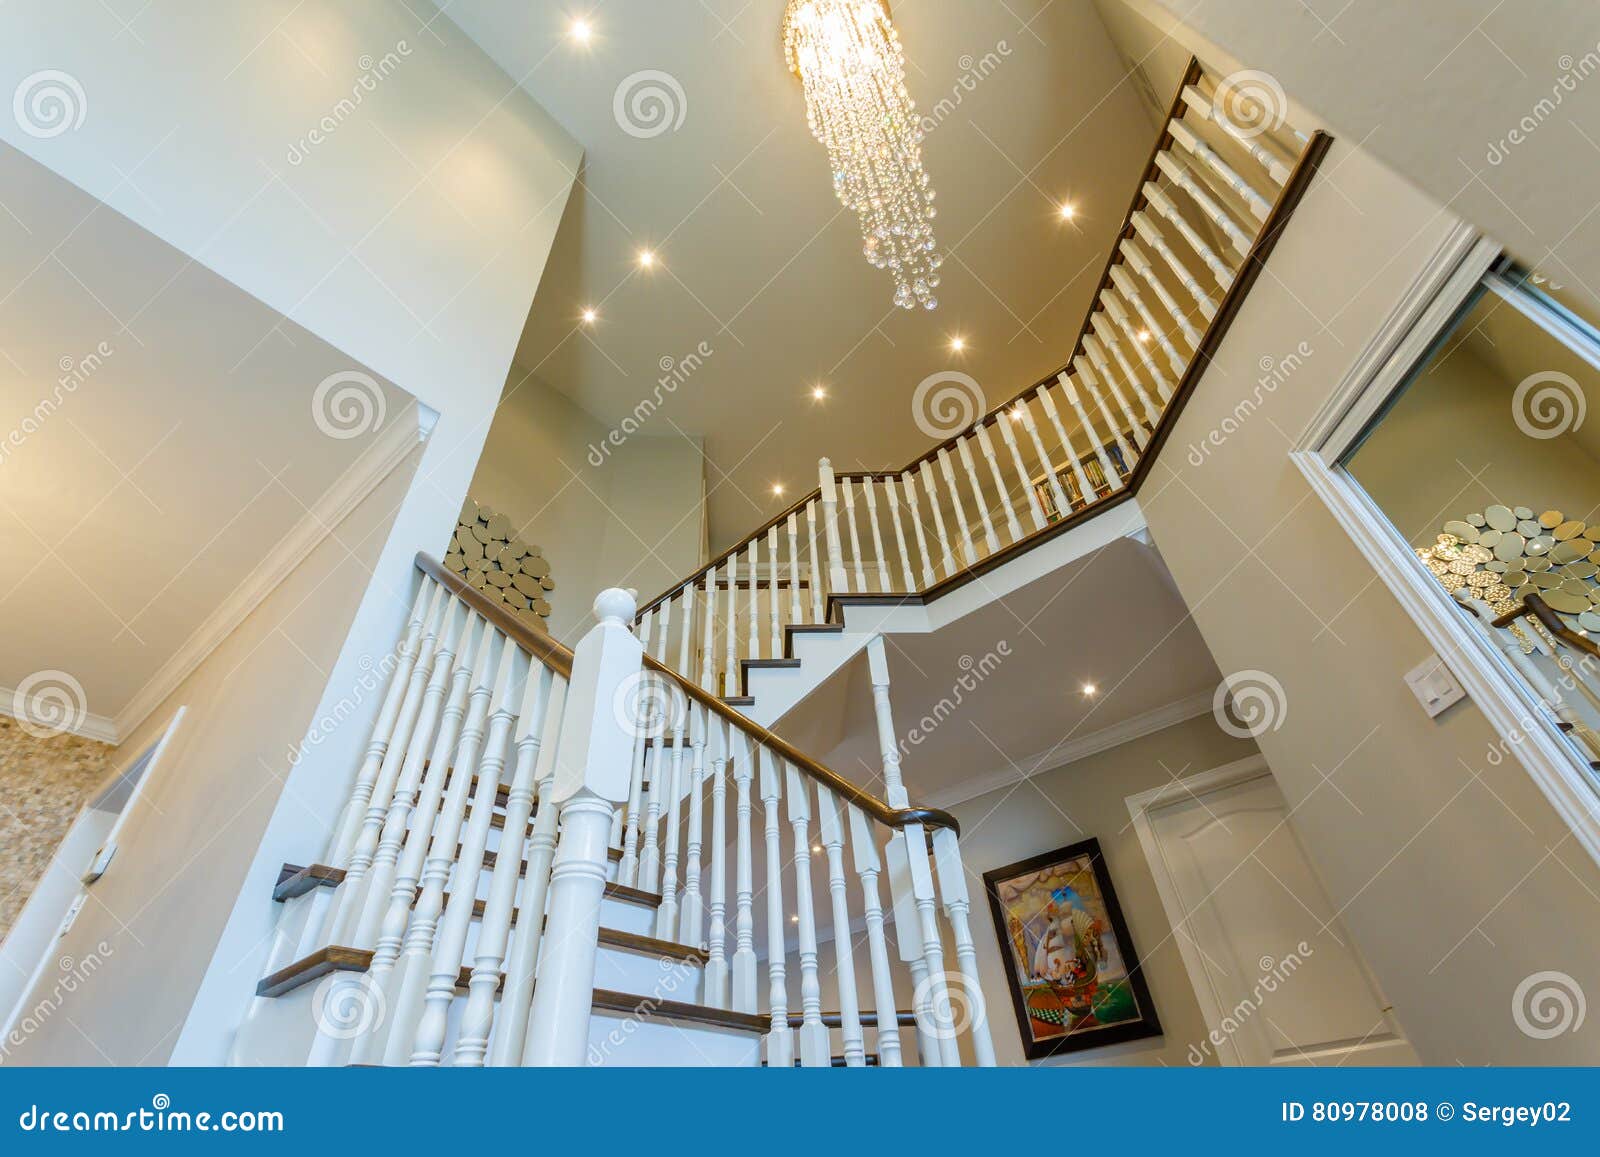 Hardwood Stairs Interior Design Stock Photo Image Of